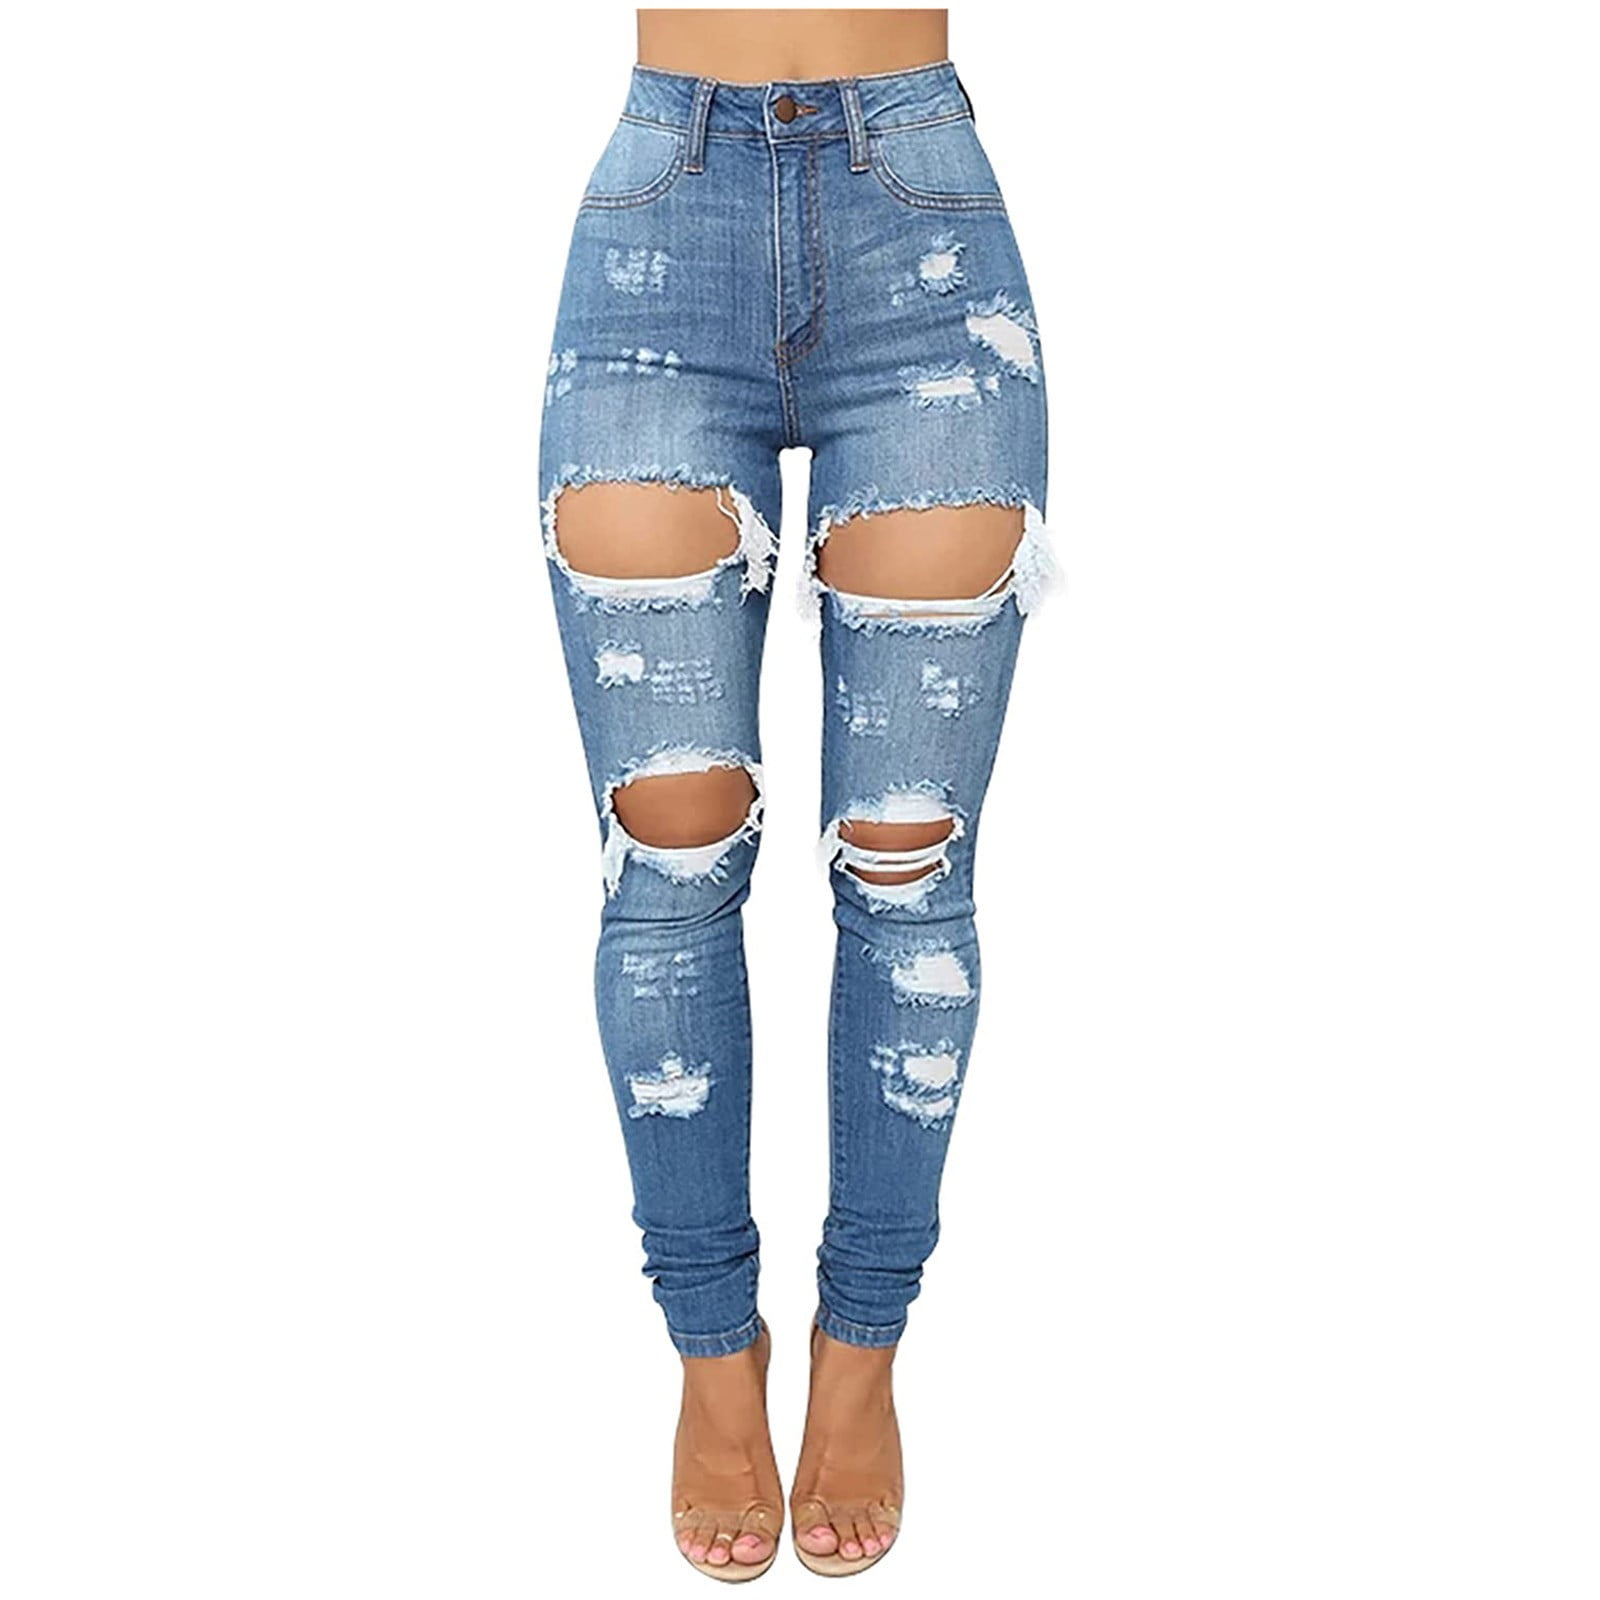 kpoplk Jeans For High Waist,Women Patchwork Destroyed Jeans Denim Pants(Blue,S) - Walmart.com